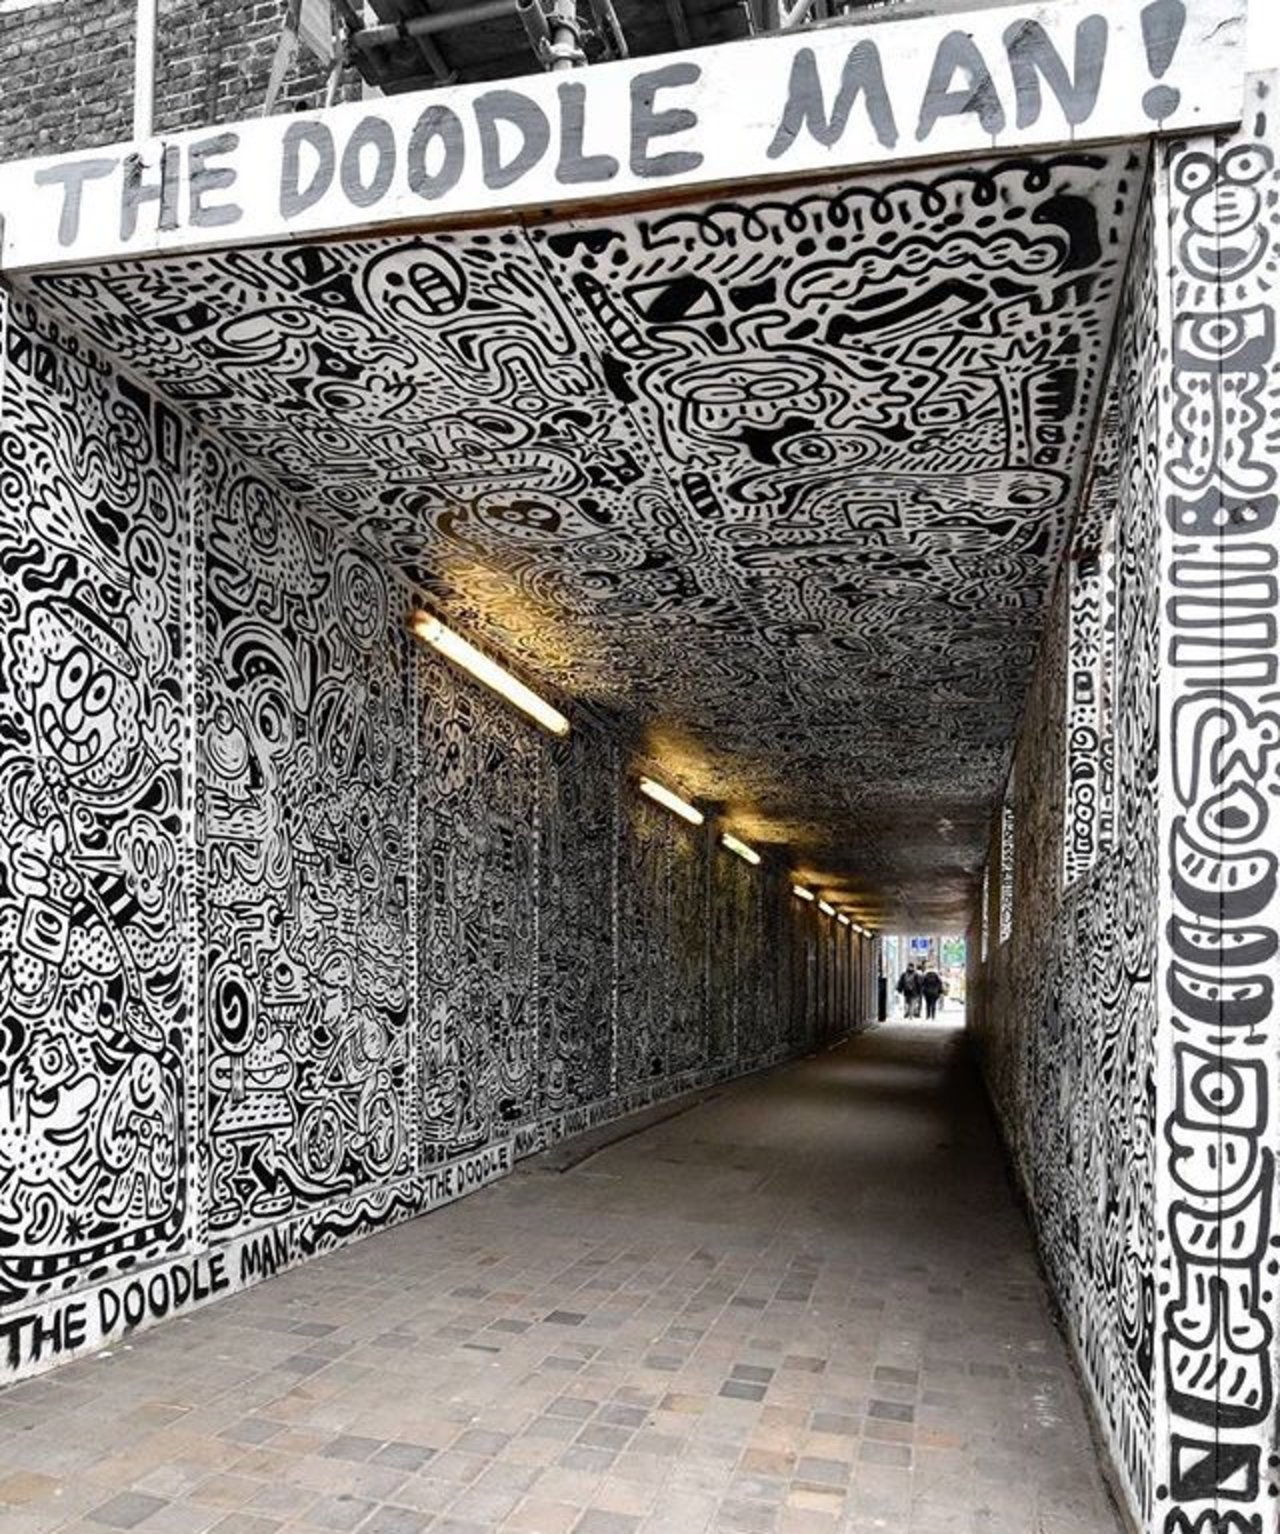 #TheFullTunnel #thedoodleman #shoreditch #eastlondon #london #streetart #graffiti #NextStayInLodon Need 2C4 real  https://t.co/QBHVHN7BUp